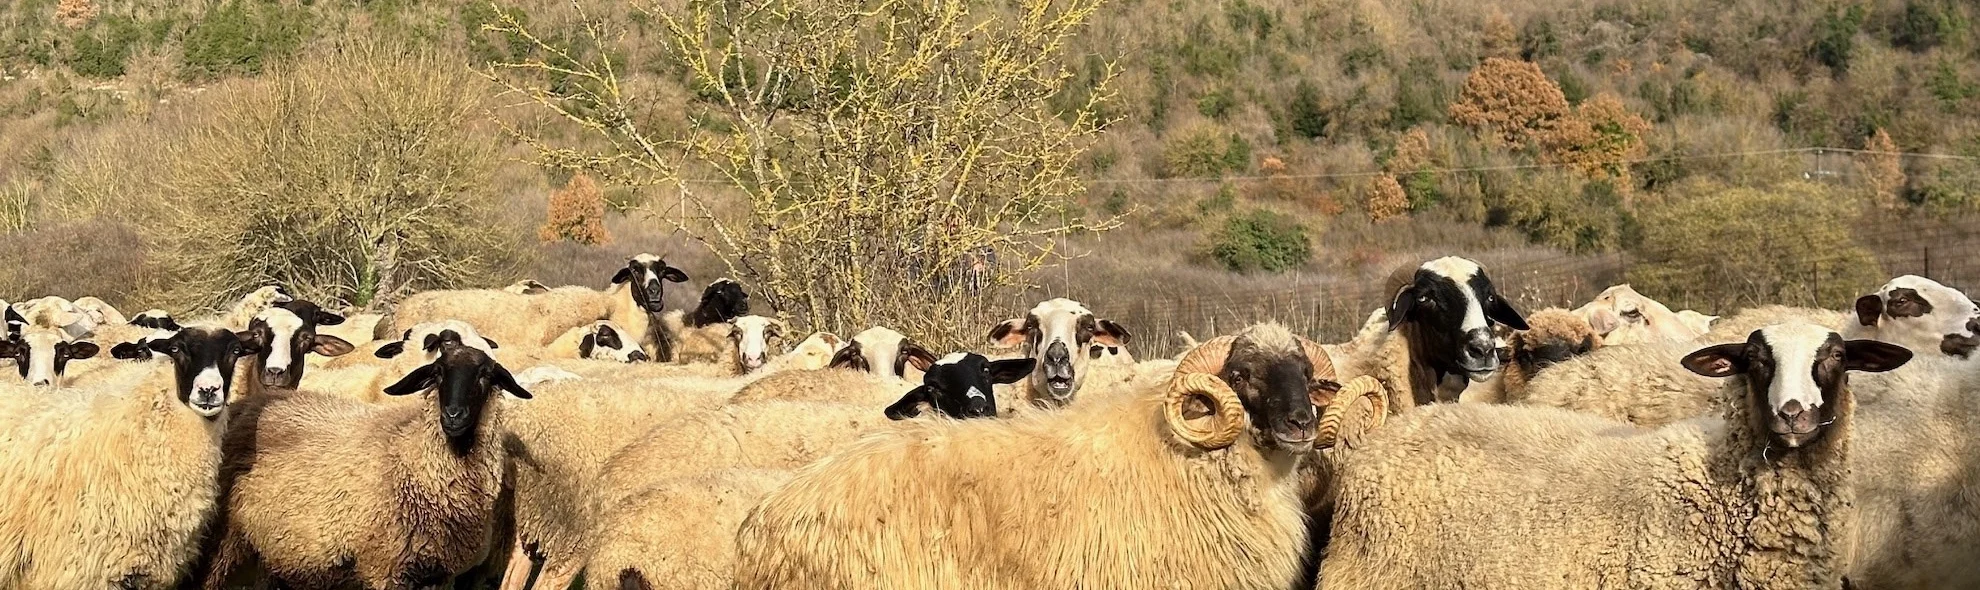 Sheep on a scrubby hillside